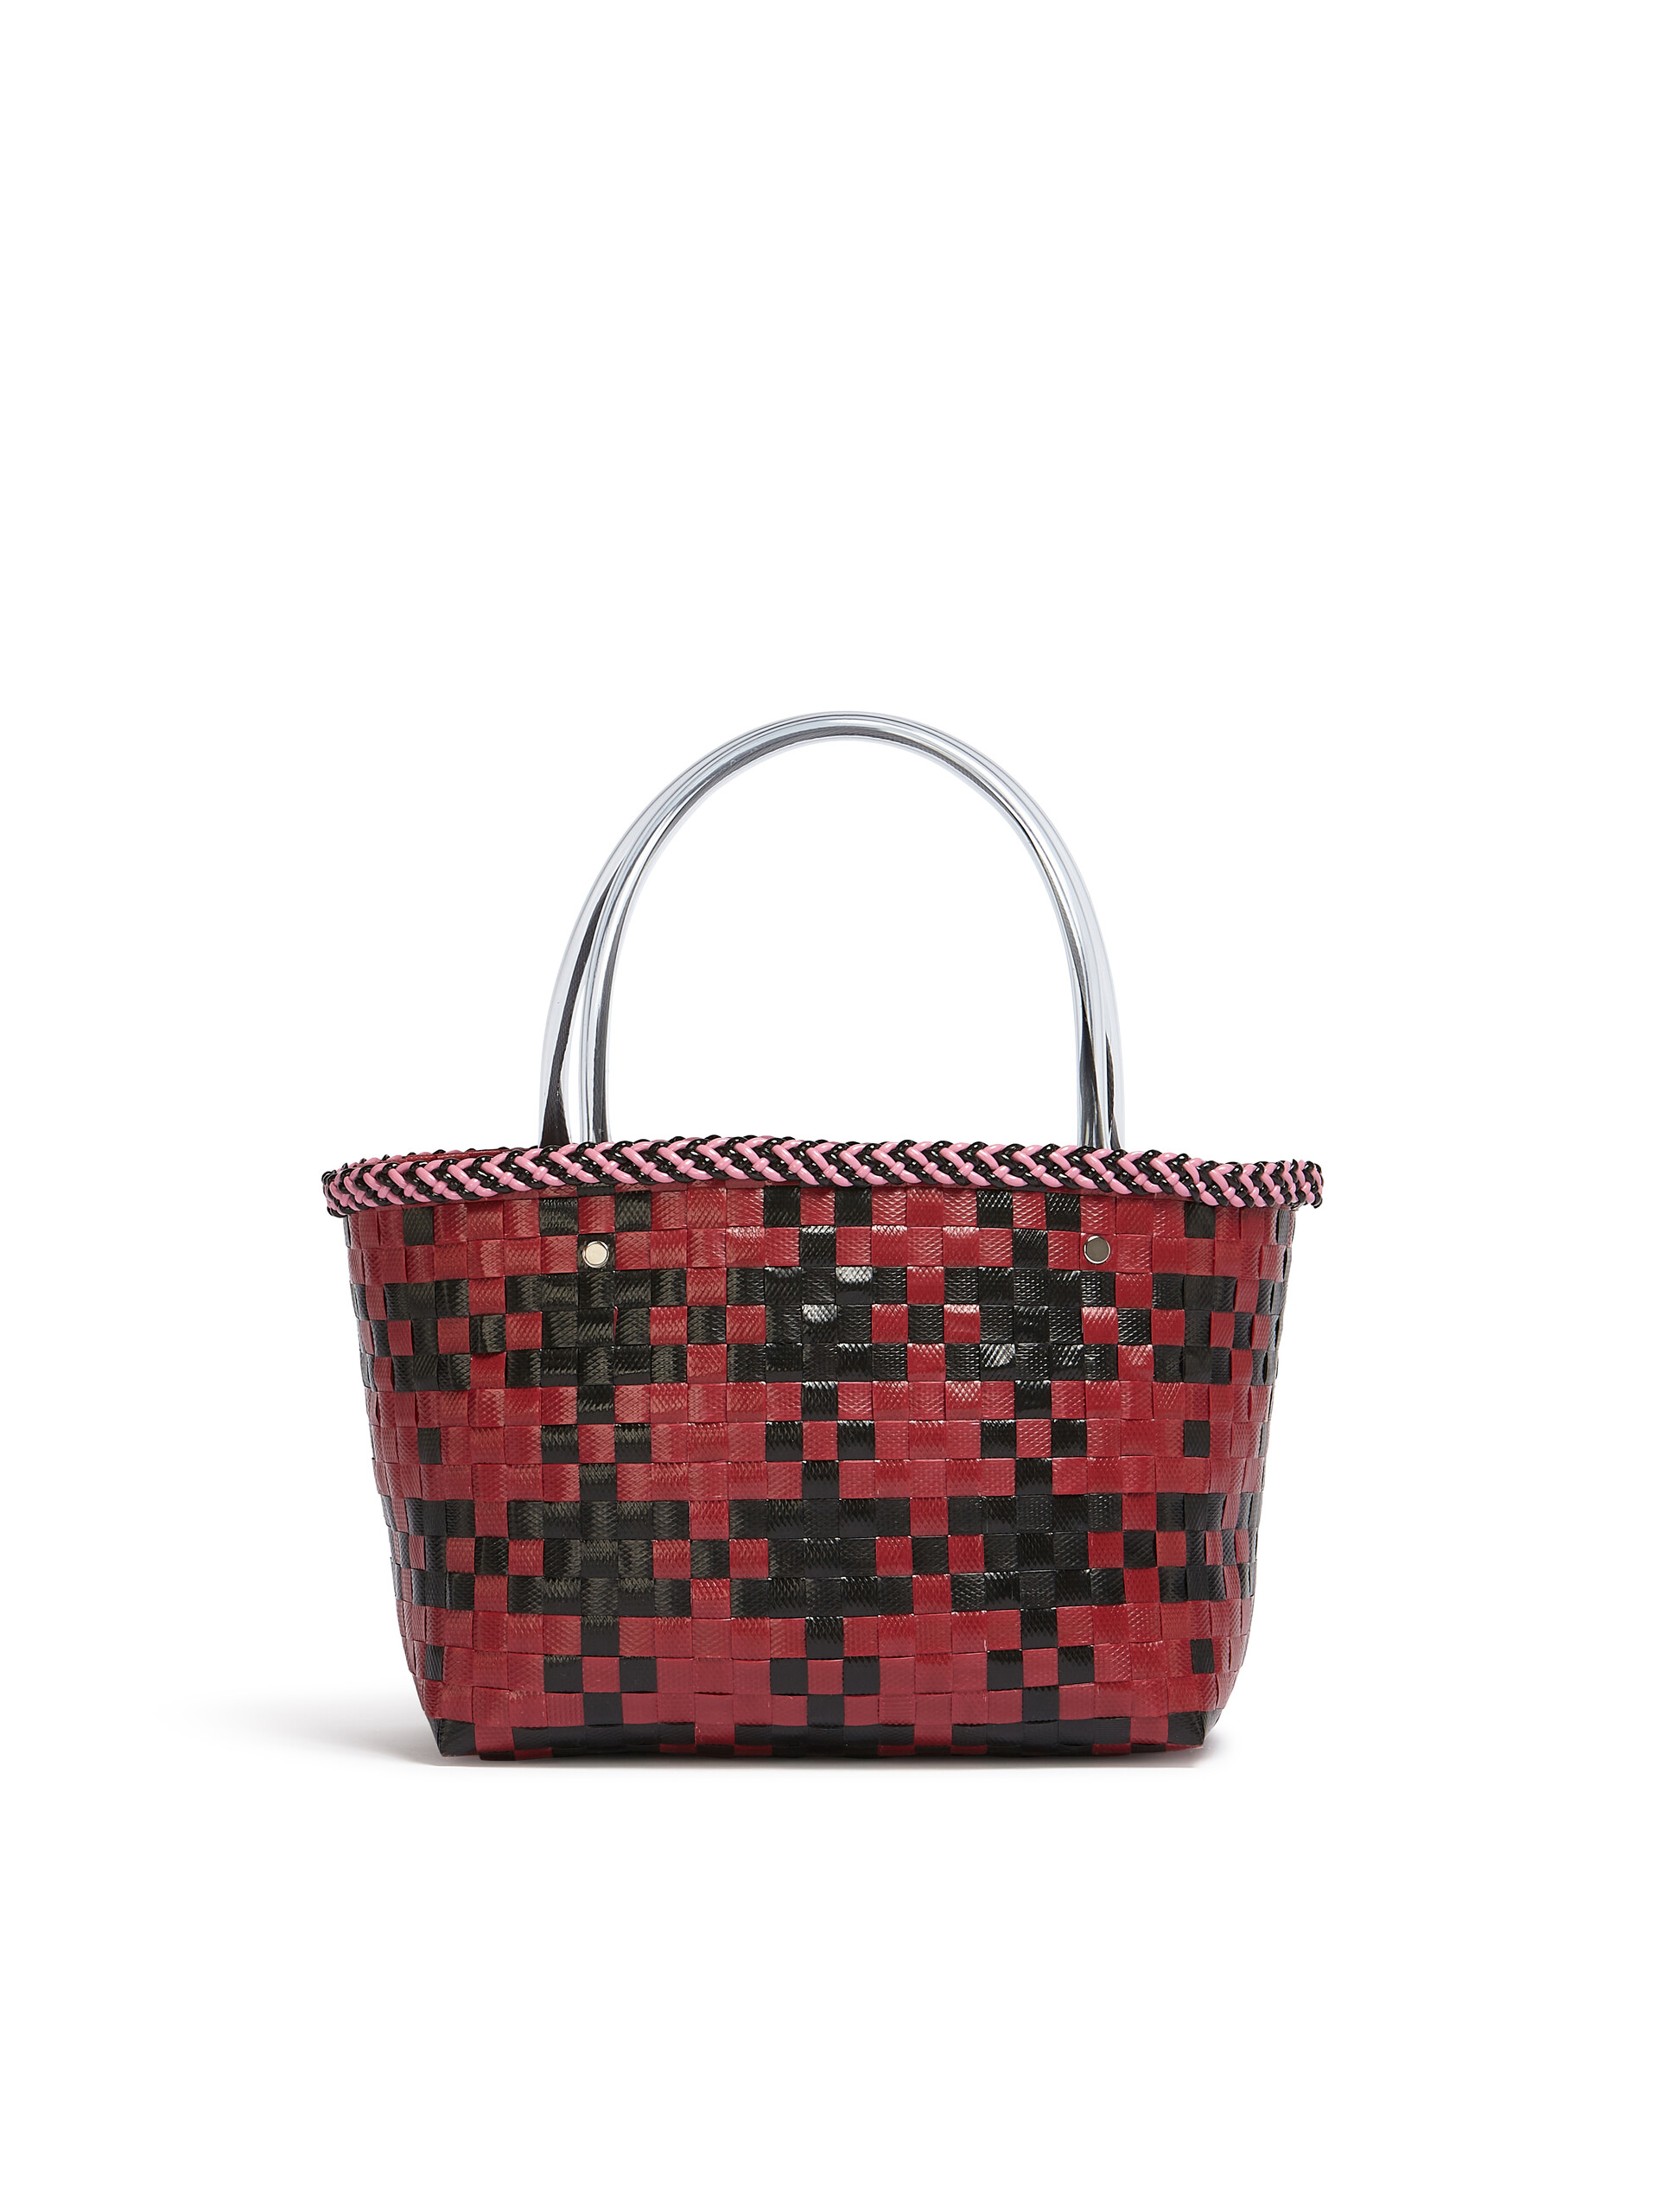 MARNI MARKET CHECK BAG in burgundy tartan woven material - Shopping Bags - Image 3